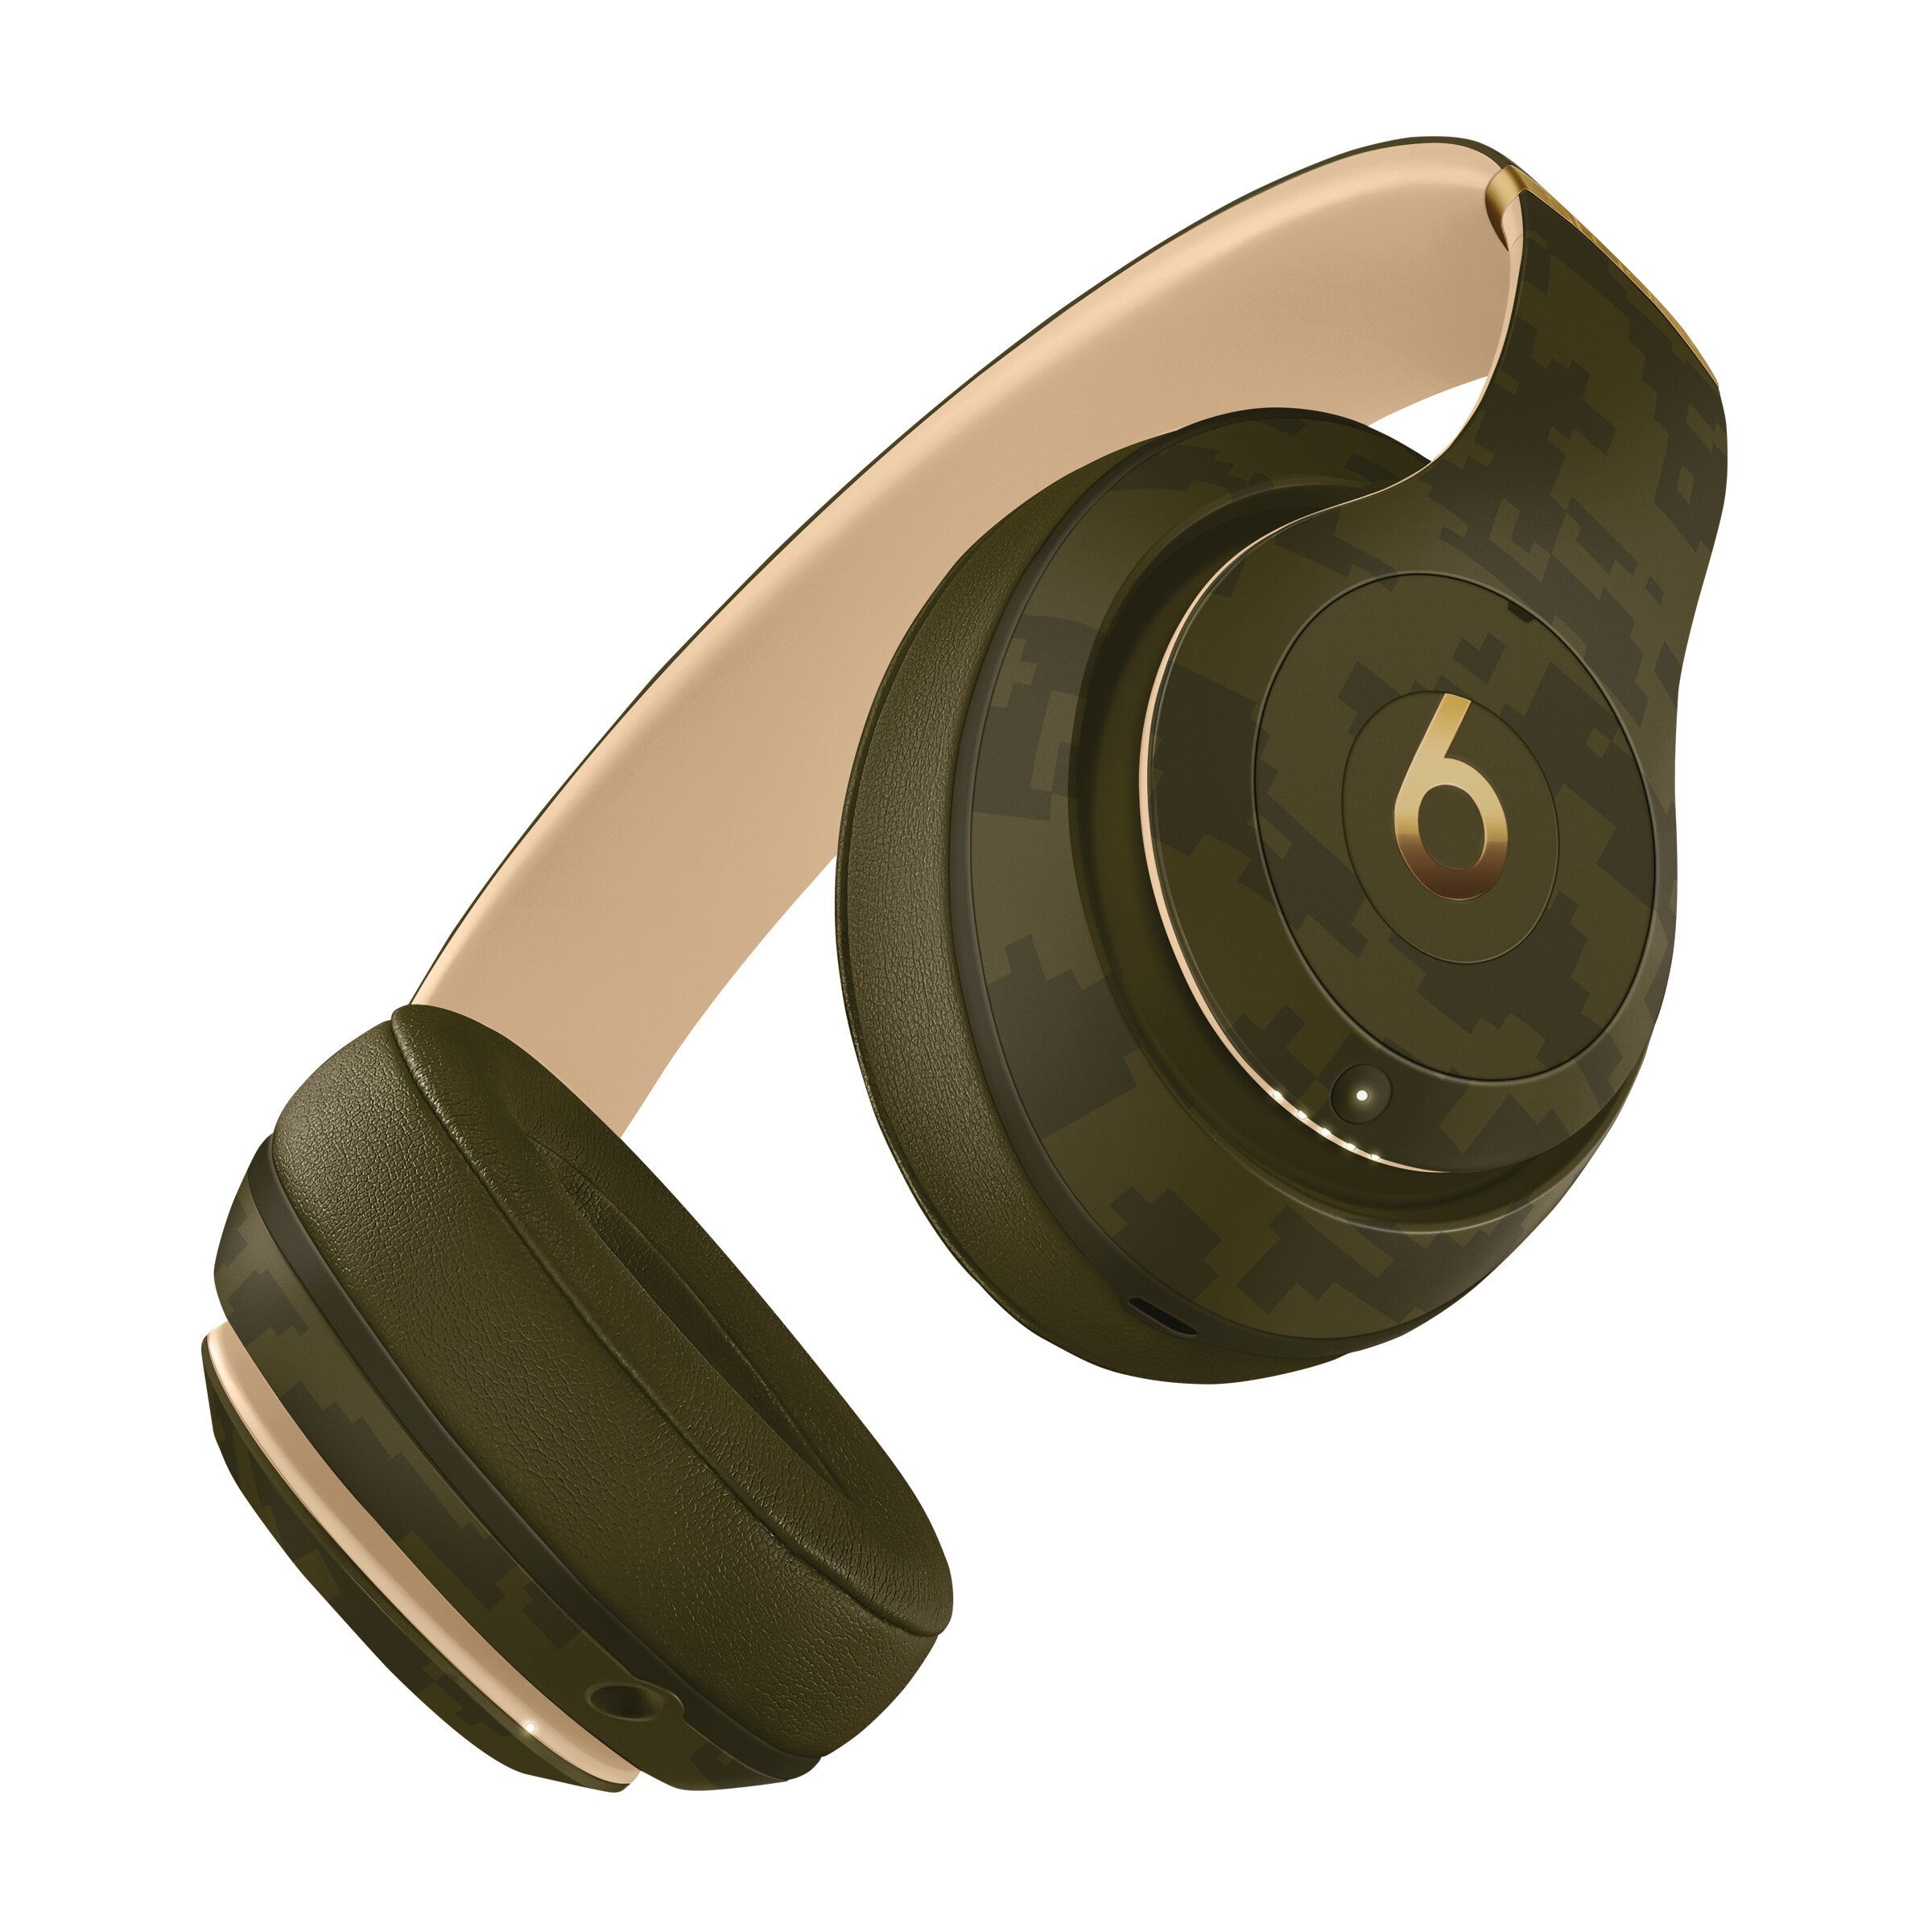 Beats Studio3 Wireless Headphones – The Camo Collection